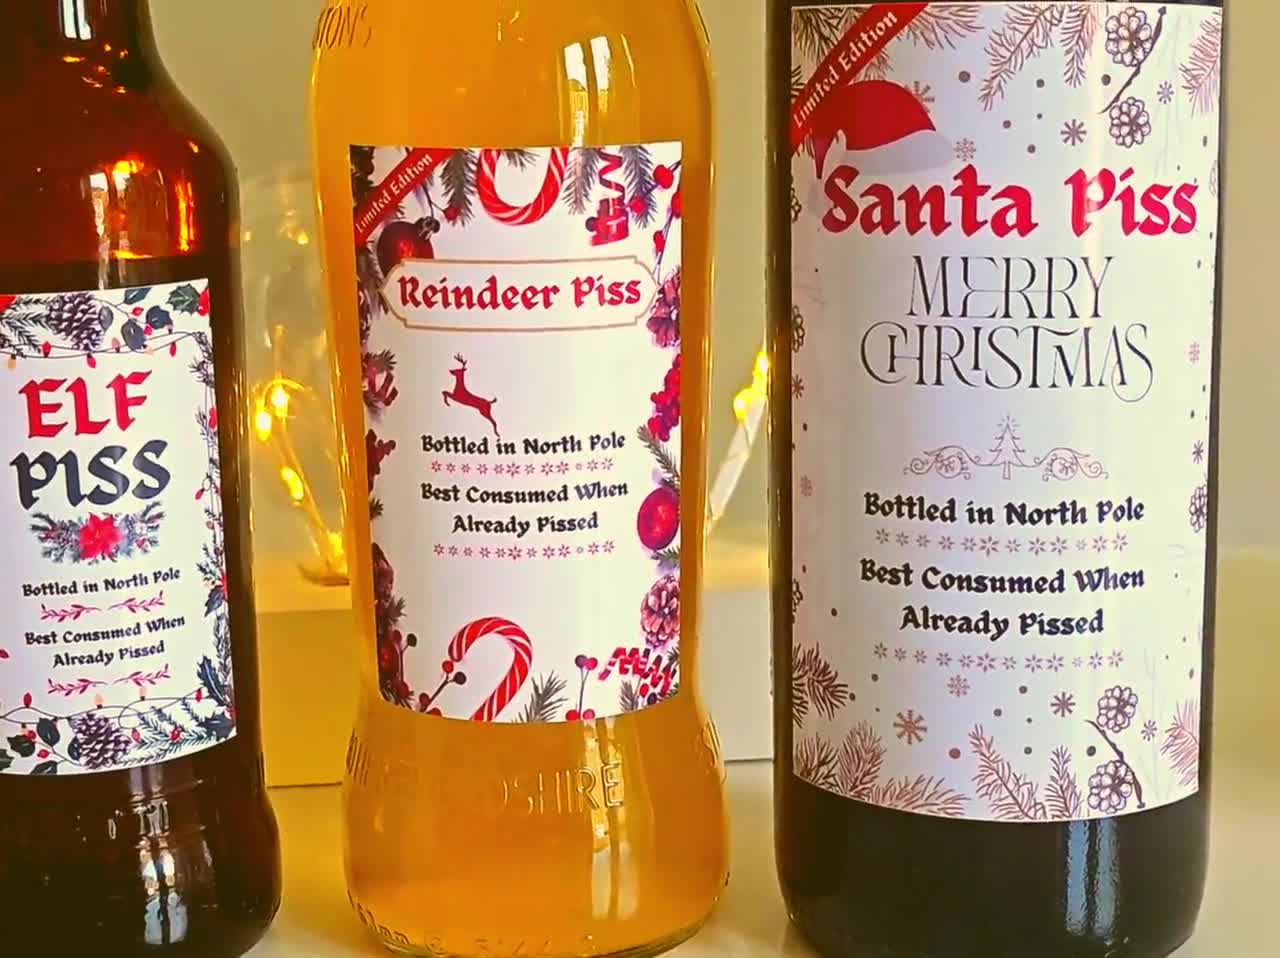 4x Elf Piss Wine Bottle Labels Hilarious Christmas Novelty Stickers Secret  Santa Funny Joke Humor Decorations Festive Holiday Gift 